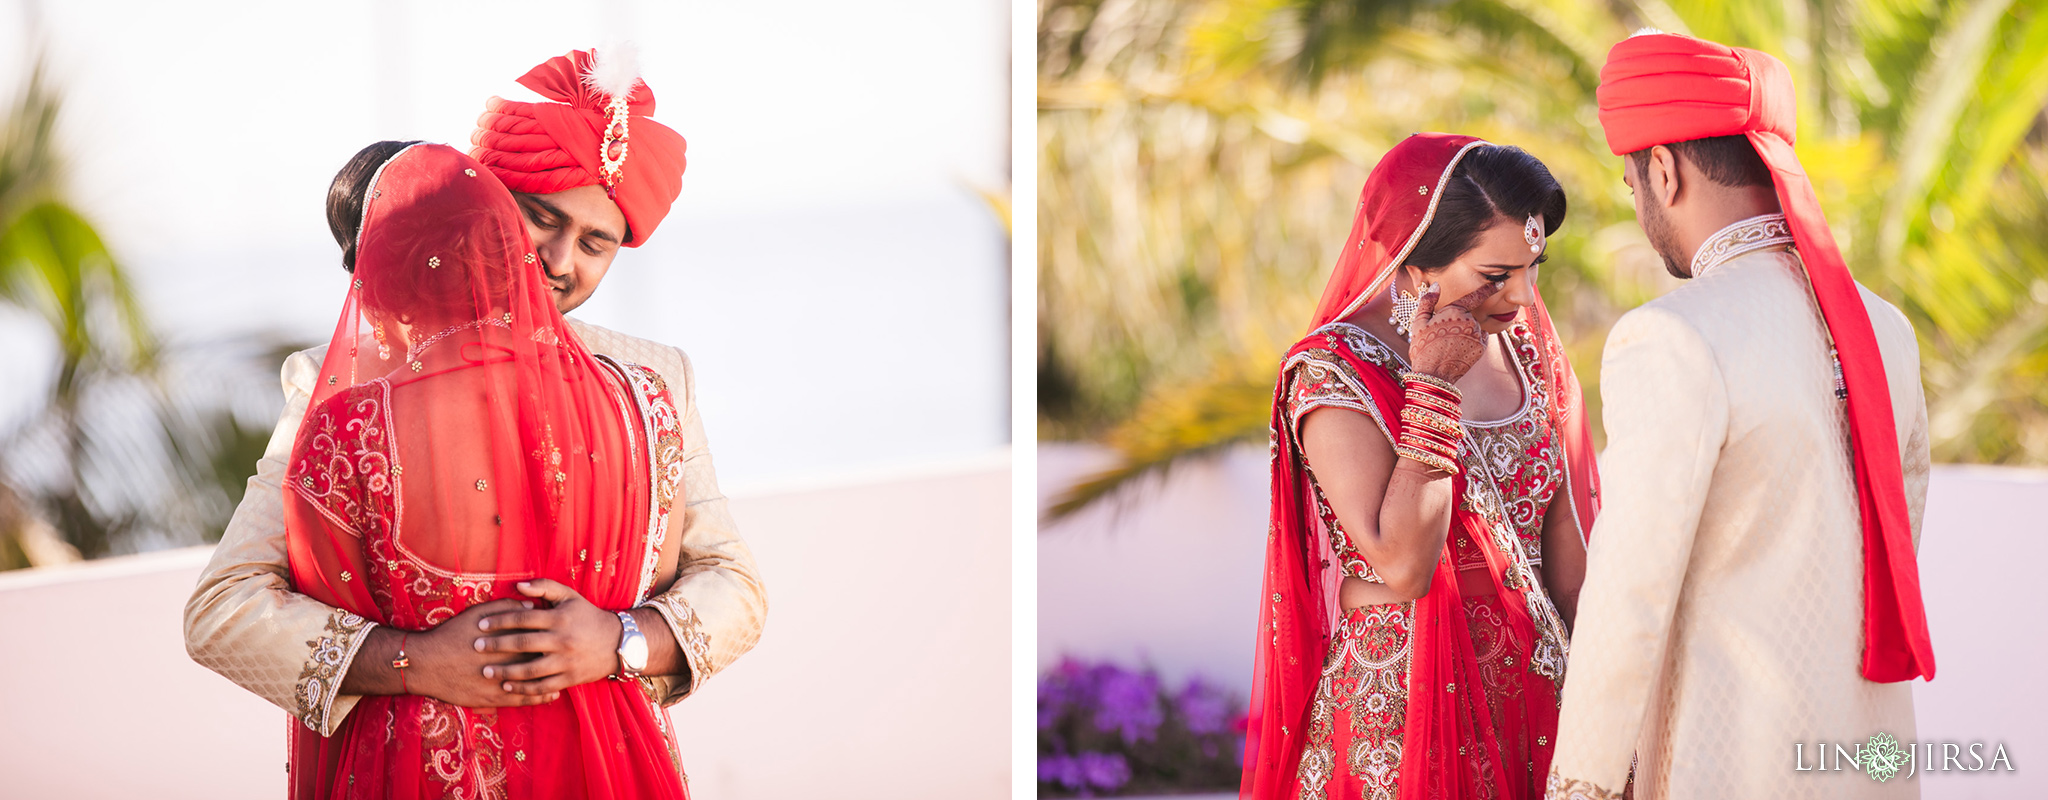 12 Hilton Santa Barbara Indian Wedding Photography